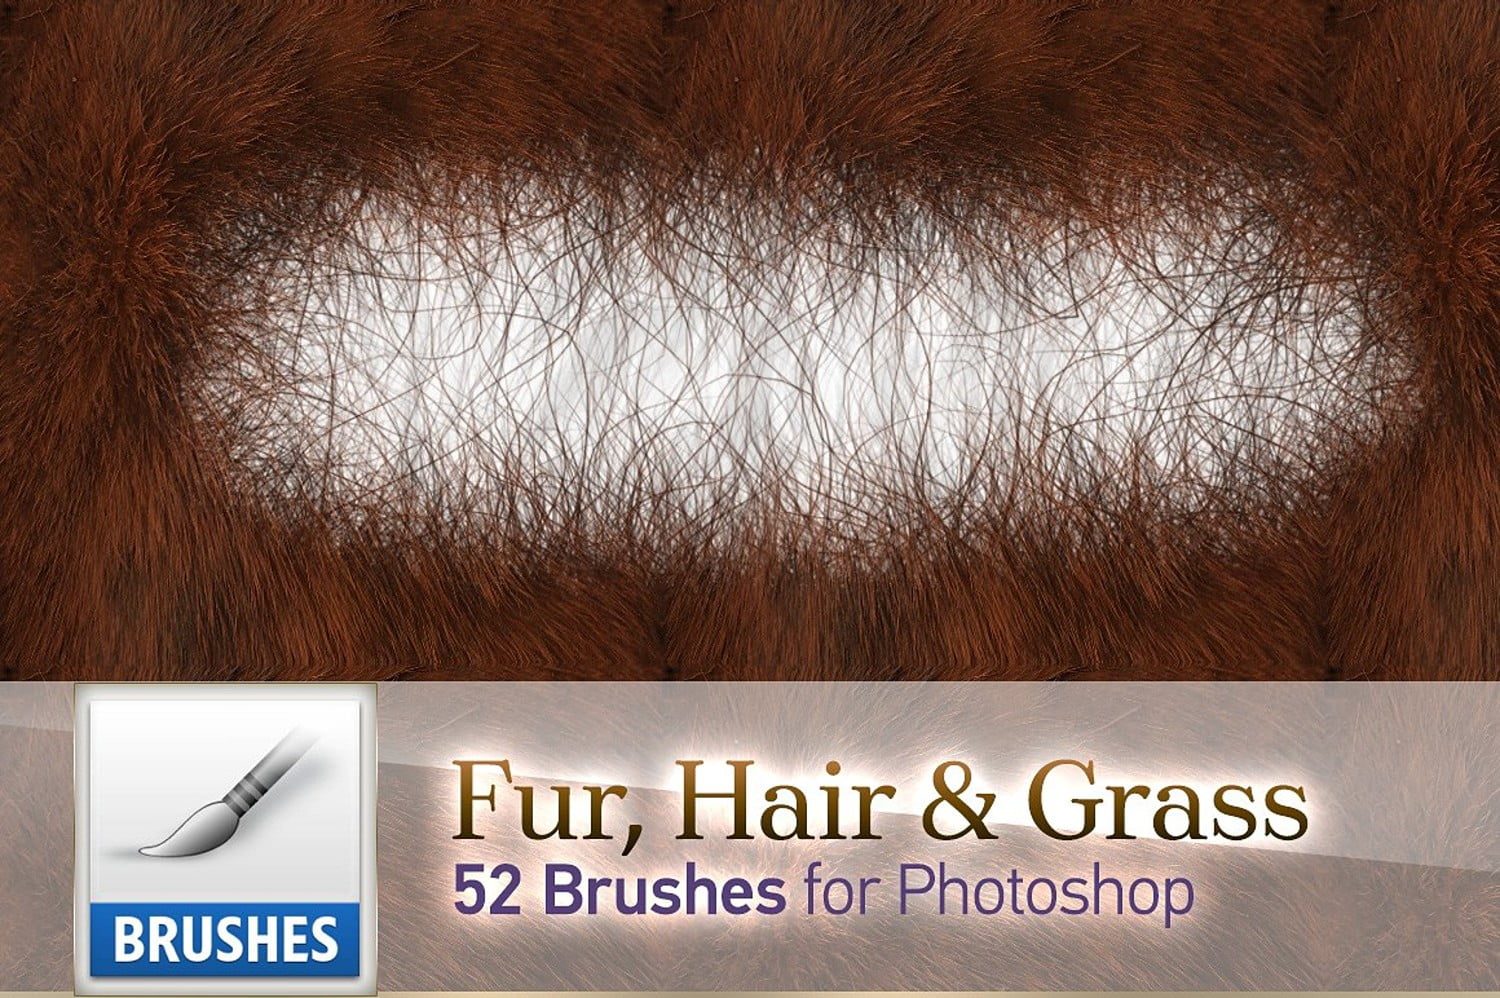 38. Fur, Hair & Grass Brushes